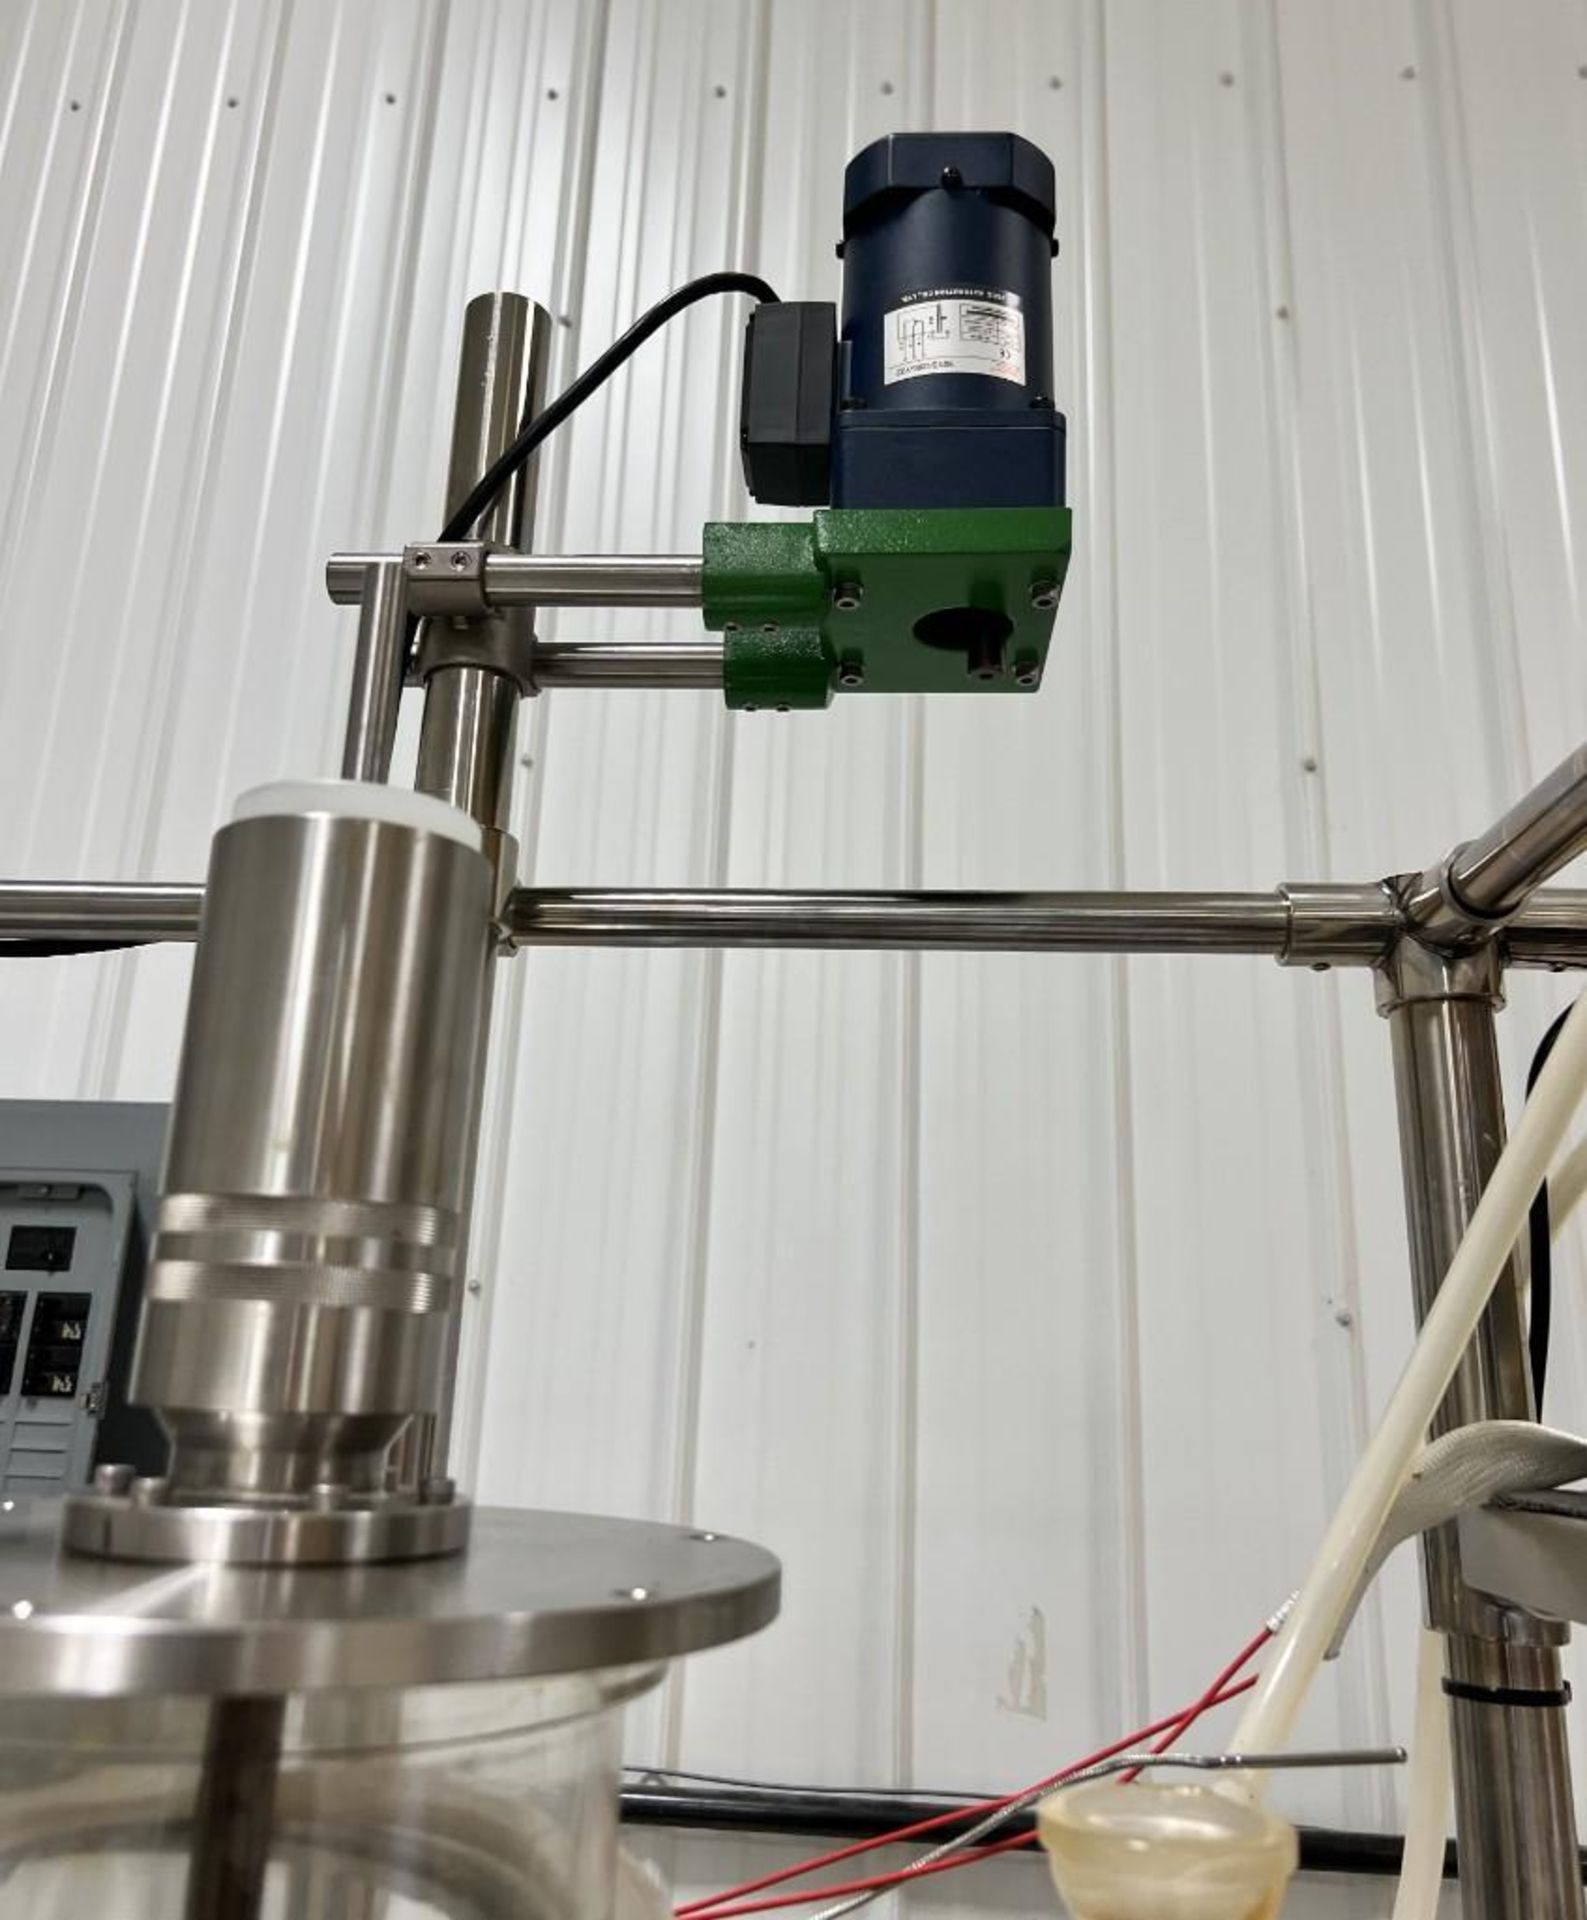 YHCHEM Wiped Film Molecular Distillation System, Model YMD-150, Built 05/2019. With misc. glass, vac - Image 4 of 29